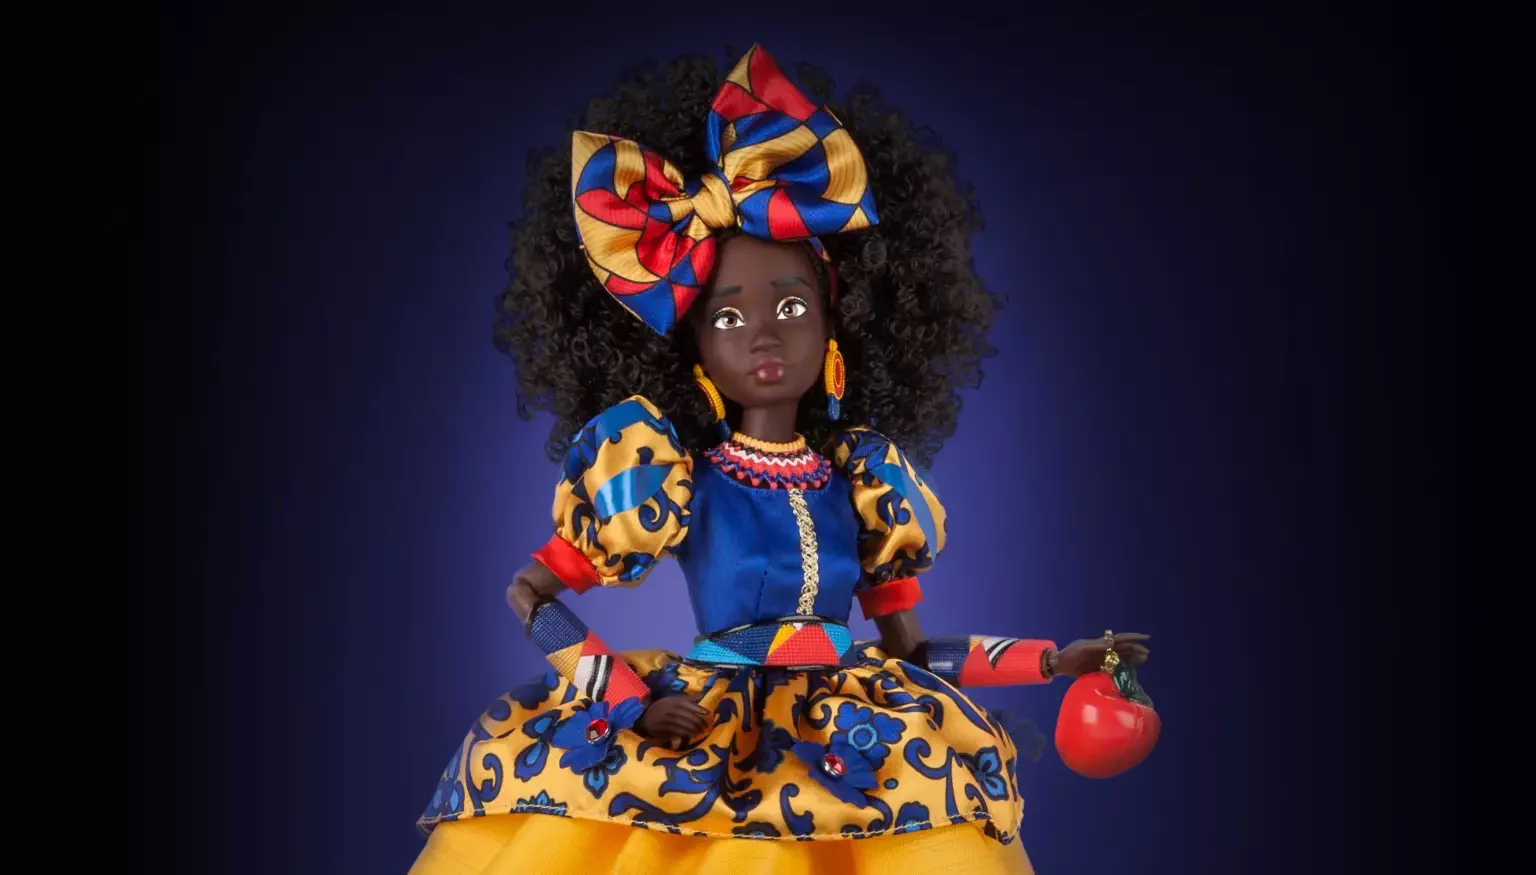 Disney Turns Photographers' Diverse Princess Portraits into Dolls